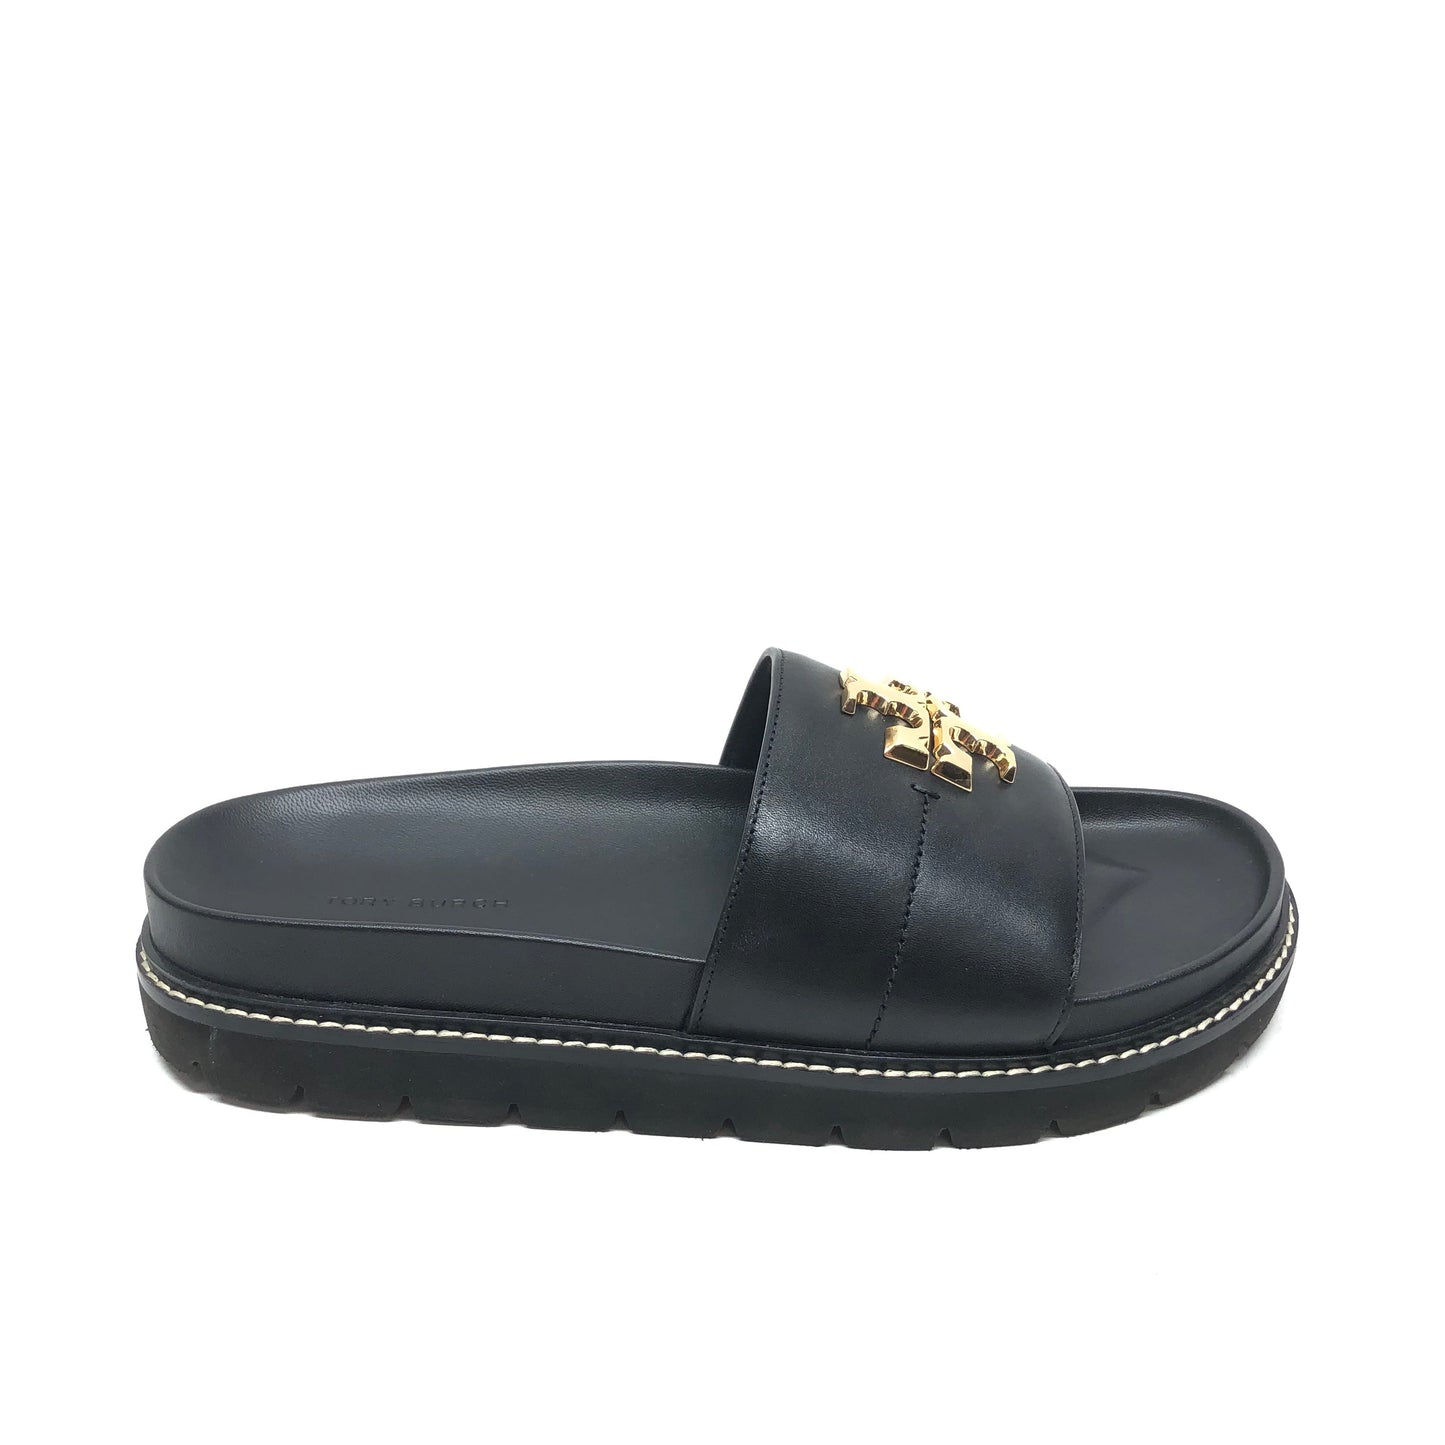 Black Shoes Flats Tory Burch, Size 9